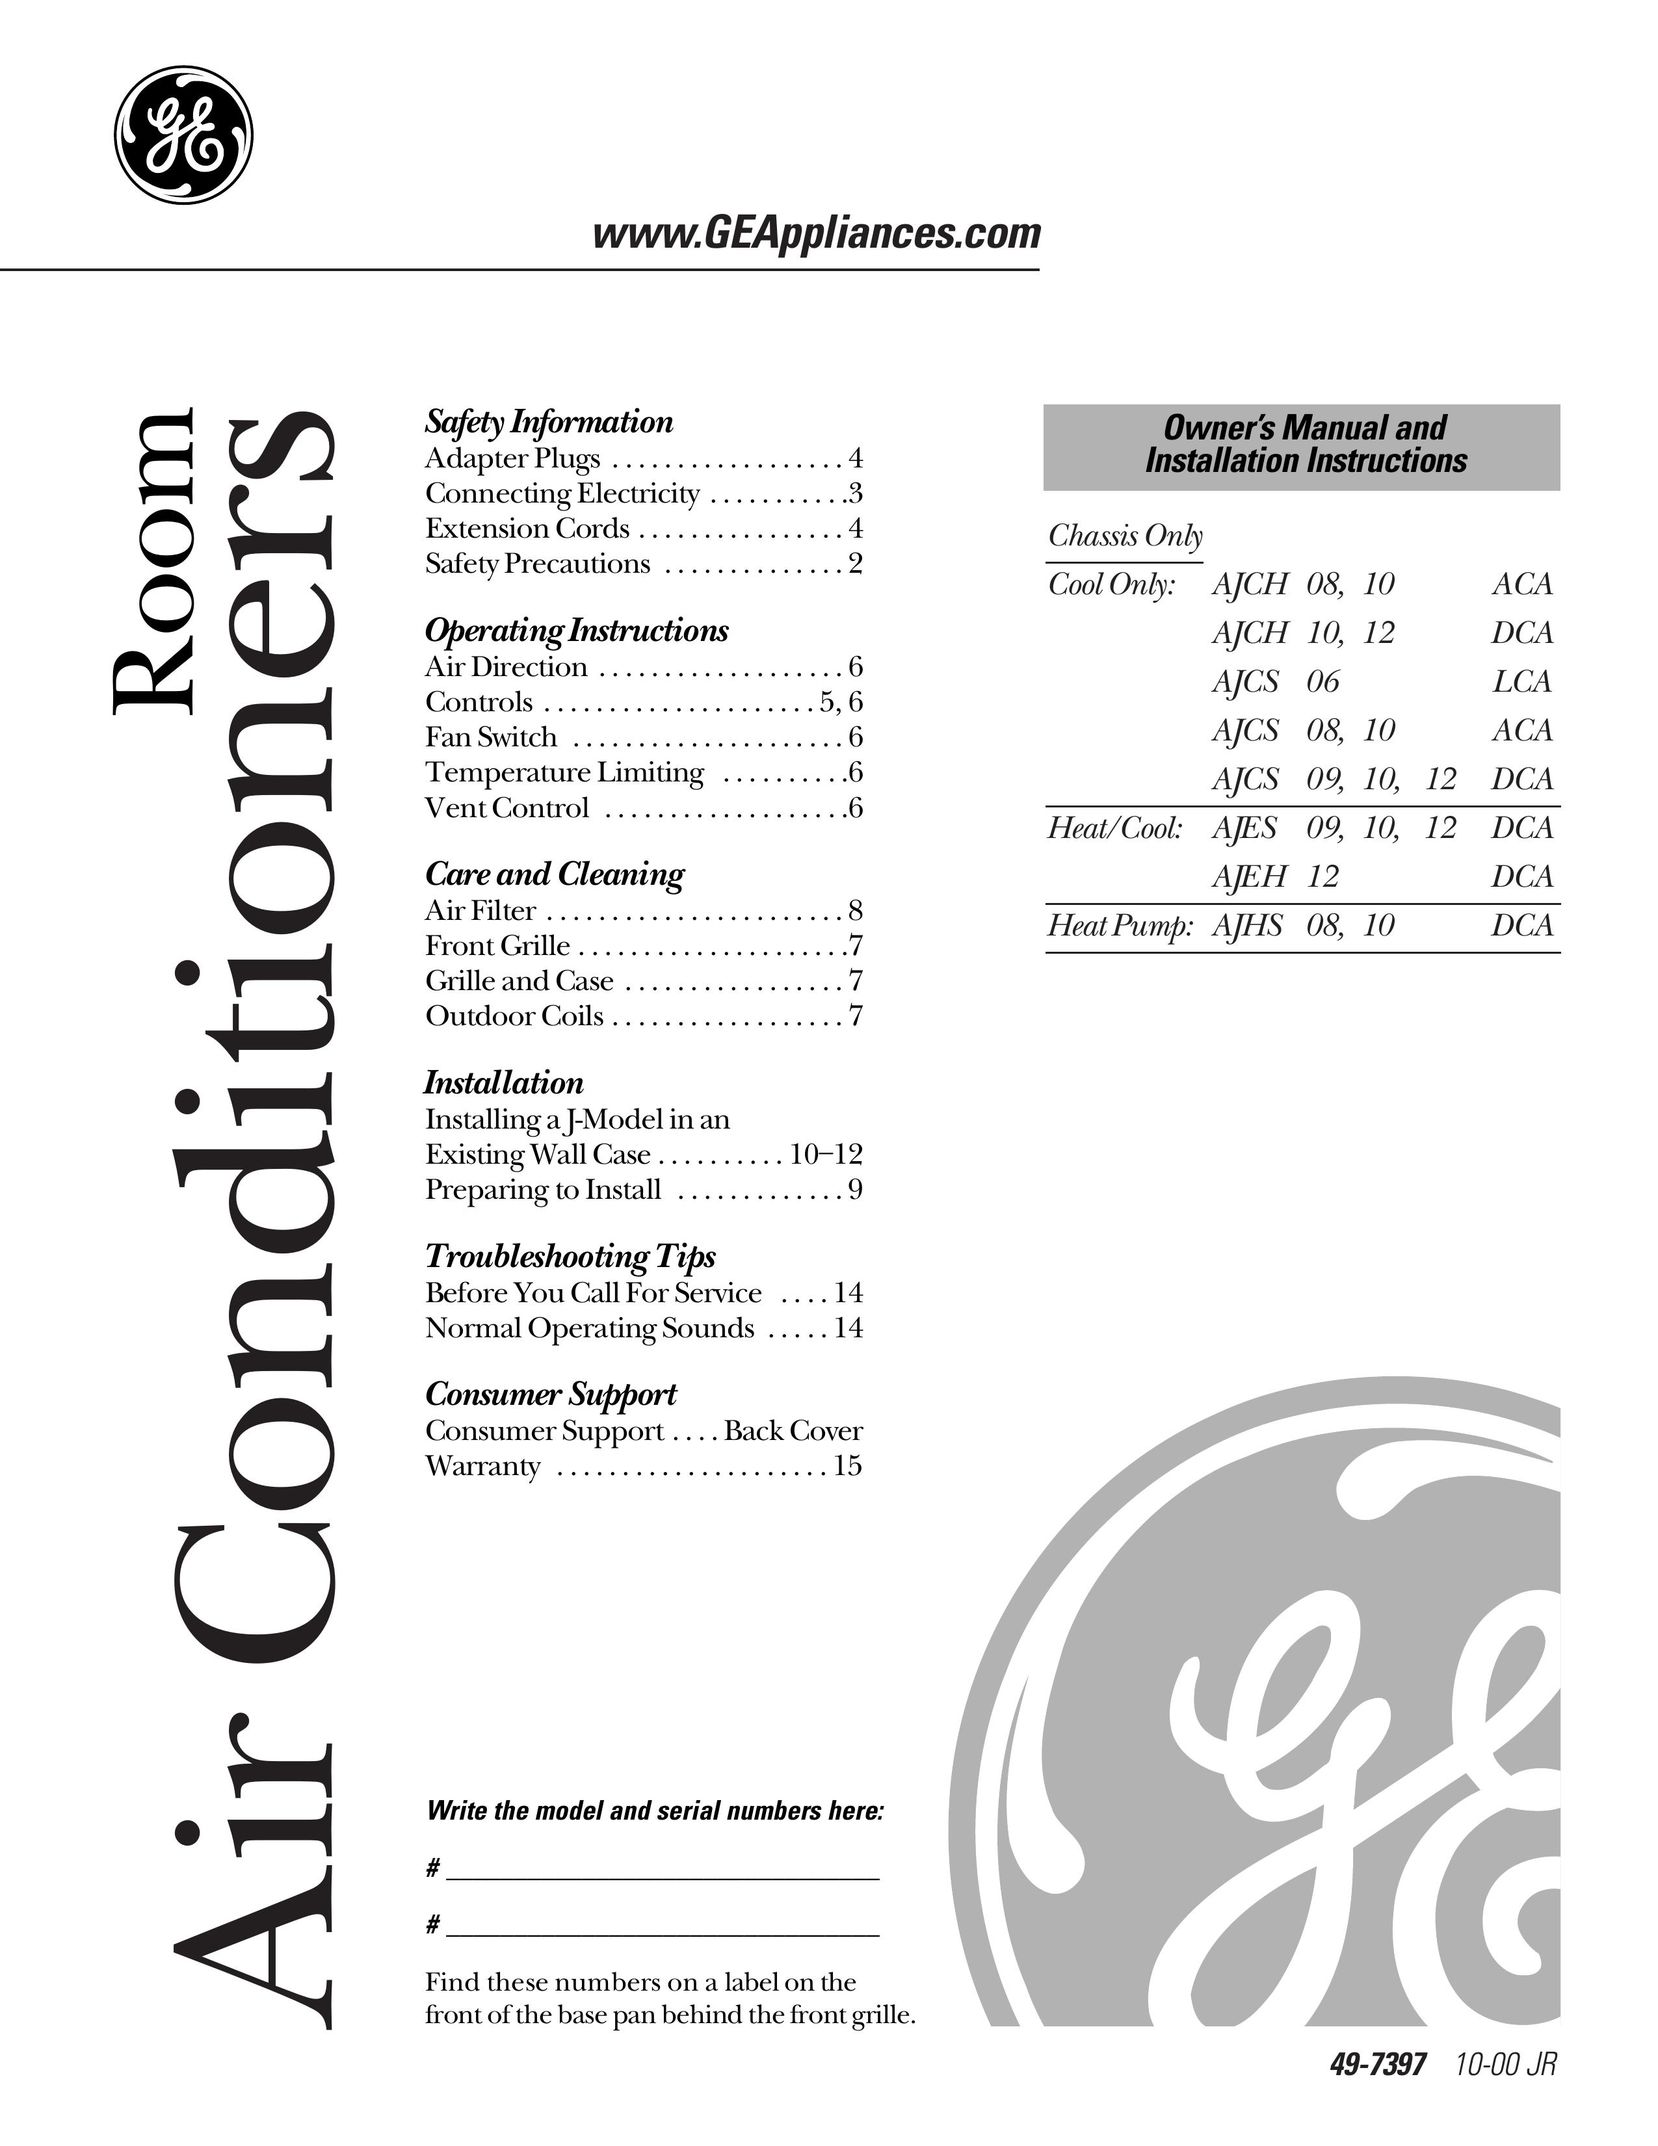 GE 12 DCA Air Conditioner User Manual